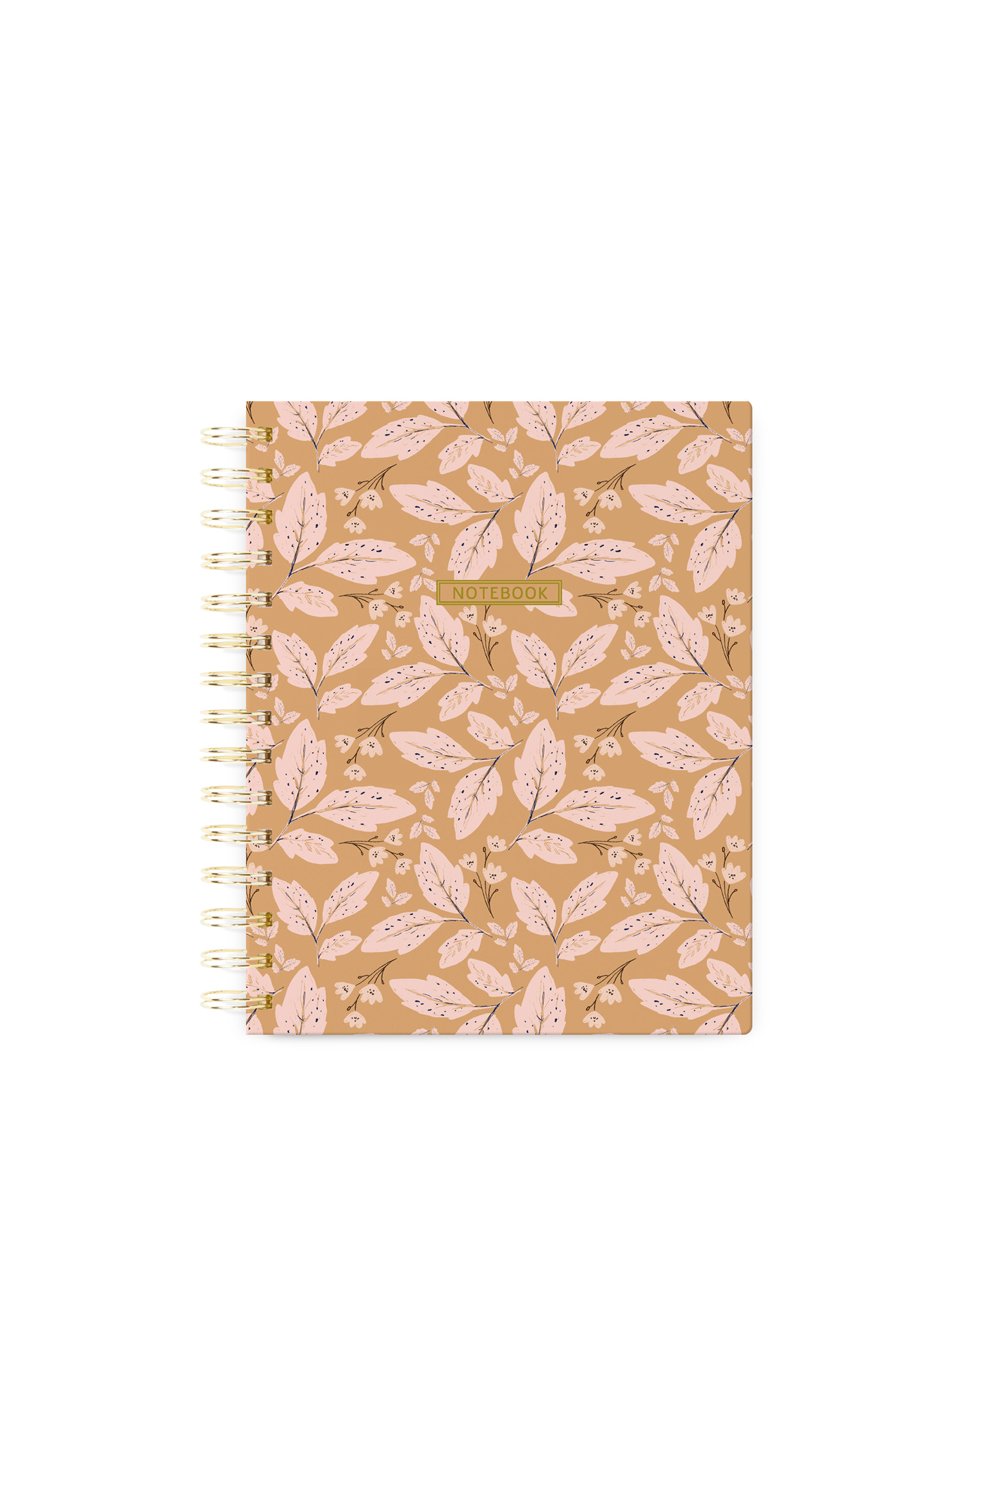 Spiral Mini Notebook - Fall Leaves